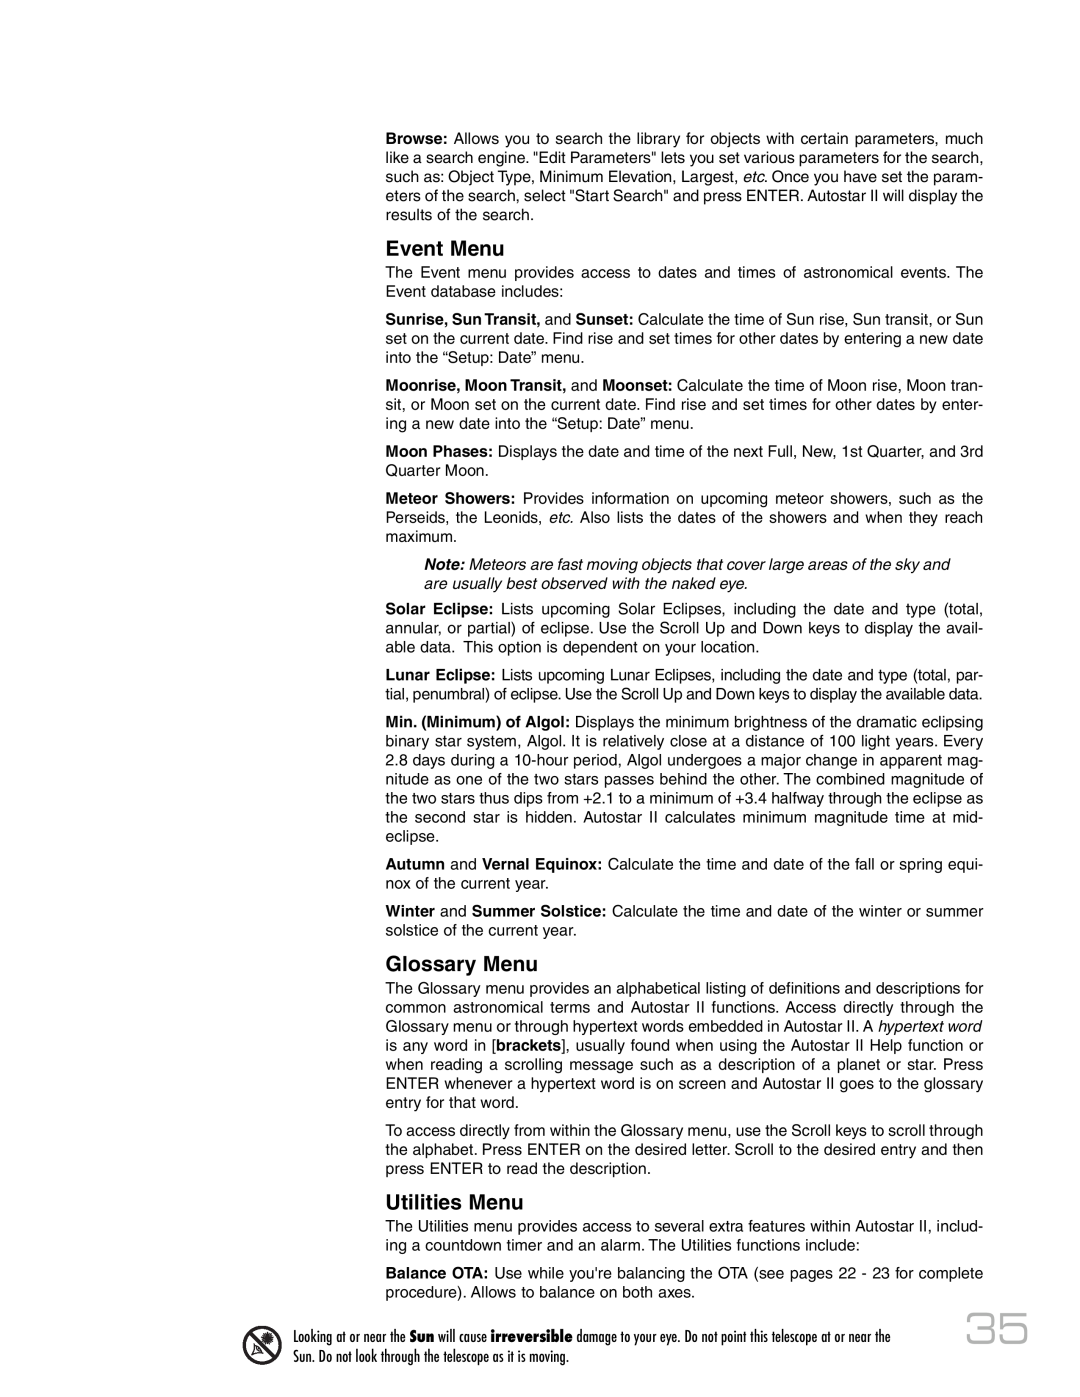 Meade RCX400 instruction manual Event Menu, Glossary Menu, Utilities Menu 